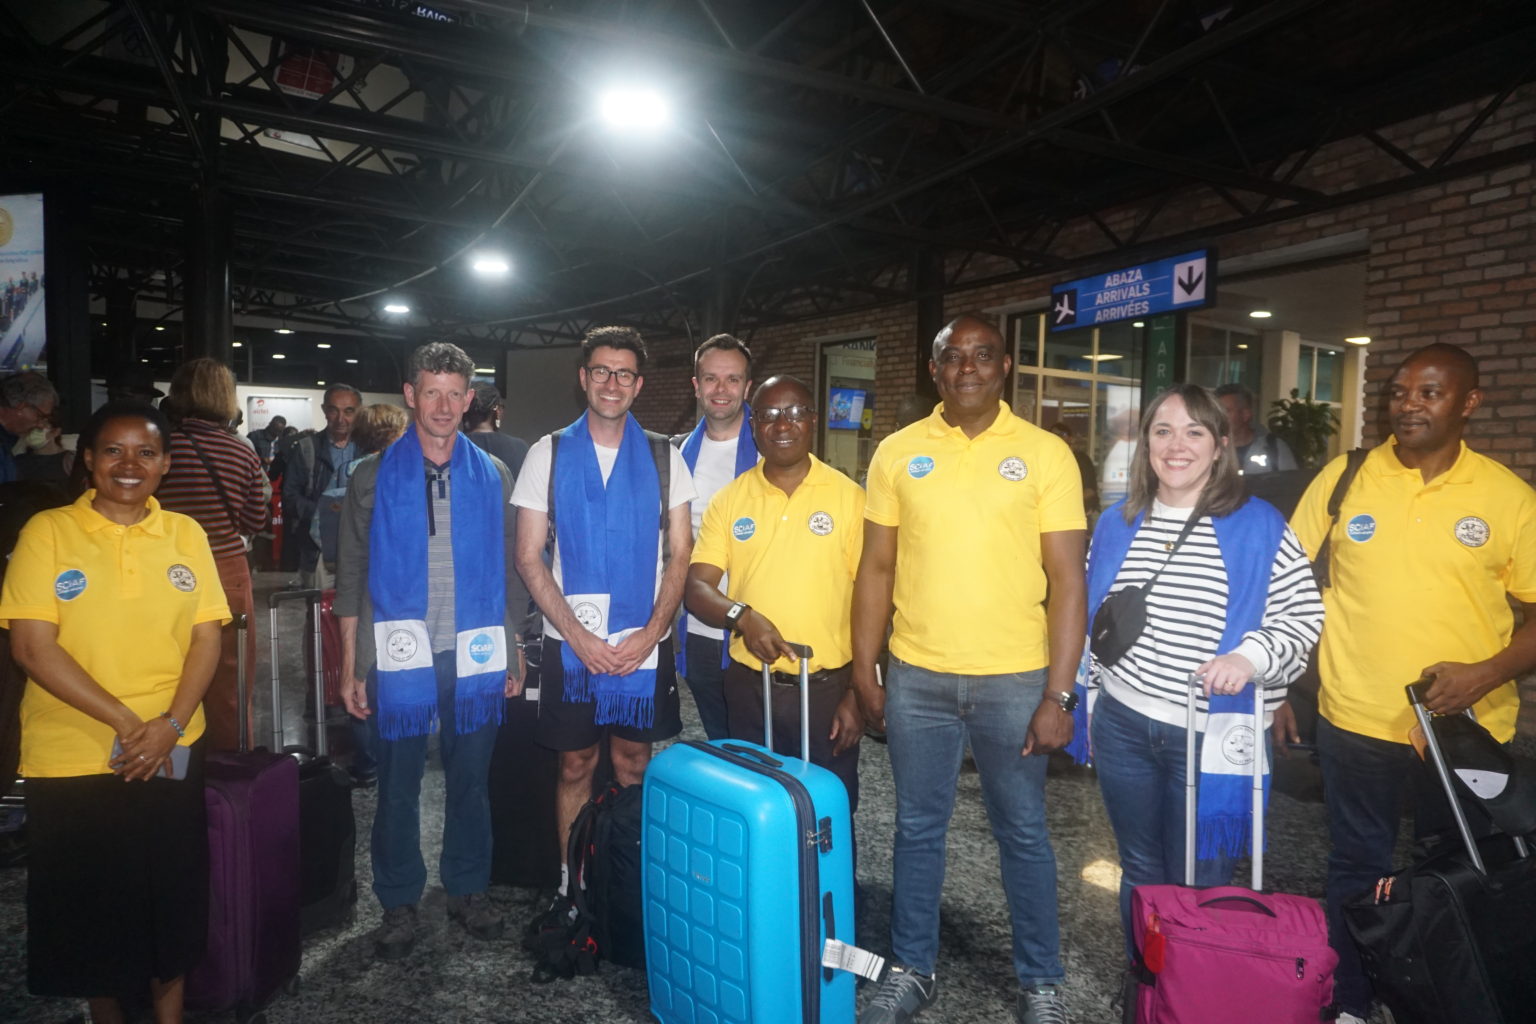 At the arrival at Kigali International Airport